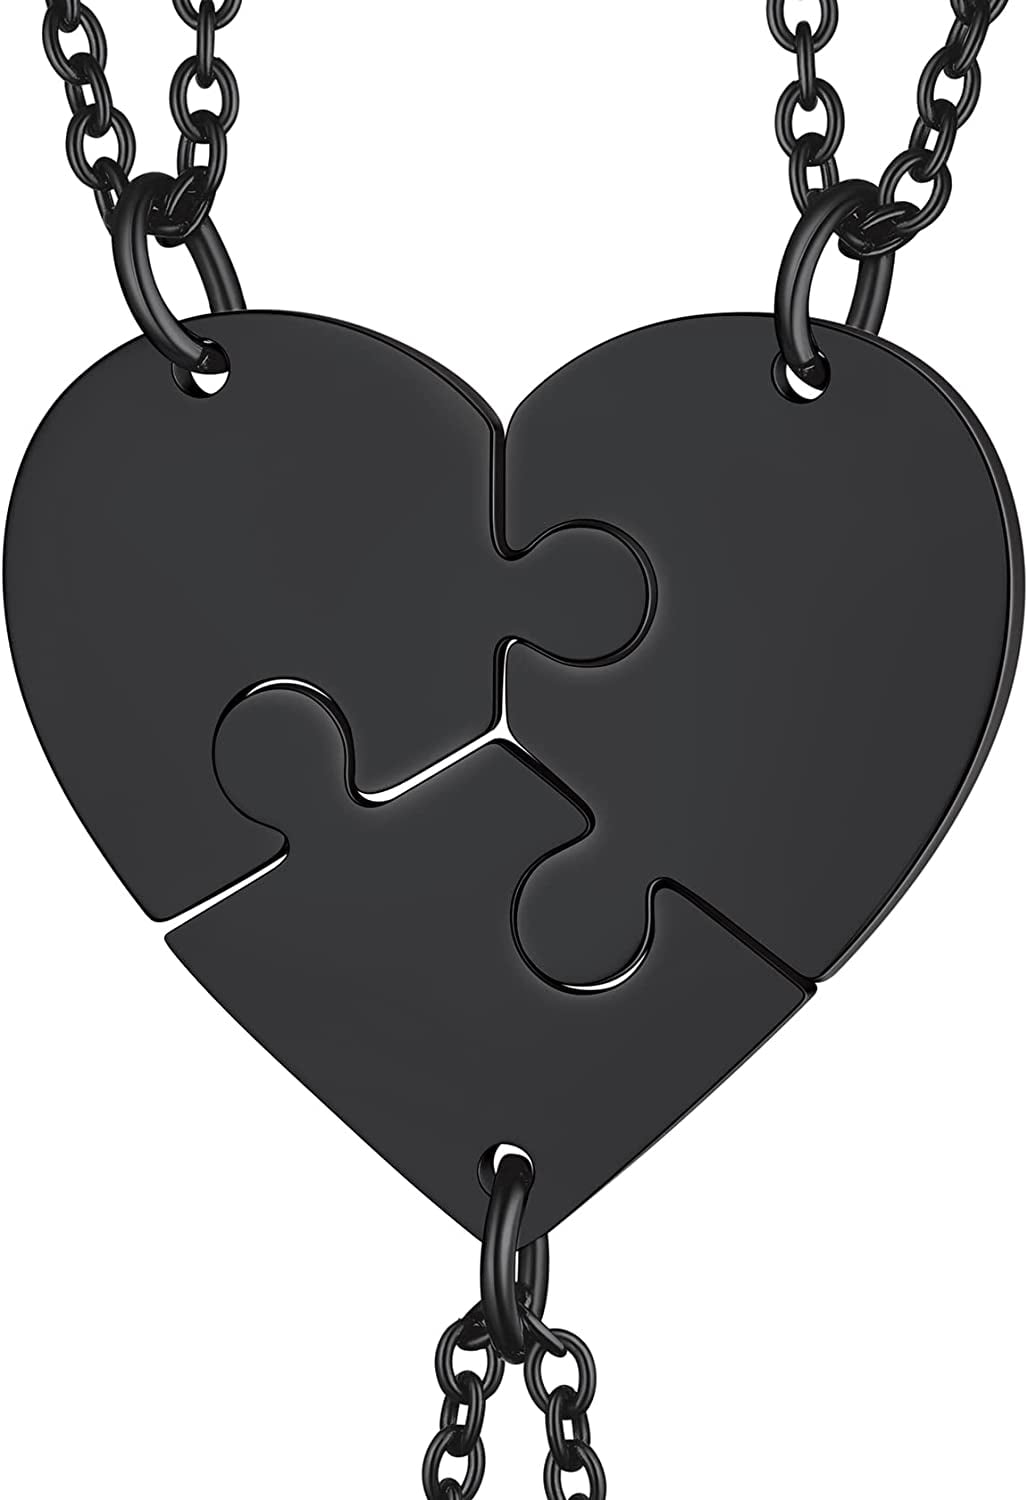 ChainsHouse Puzzle Friendship Necklace Stainless Steel BFF Necklace 2 3 4 5 6 7 8pcs Personalized Matching Heart Pendant Necklaces Women Men Send Gif cf38d8c6 61a4 47cc 9286 a10d99ee4a68.e8617e223601a8e084556ebd2ac21c90